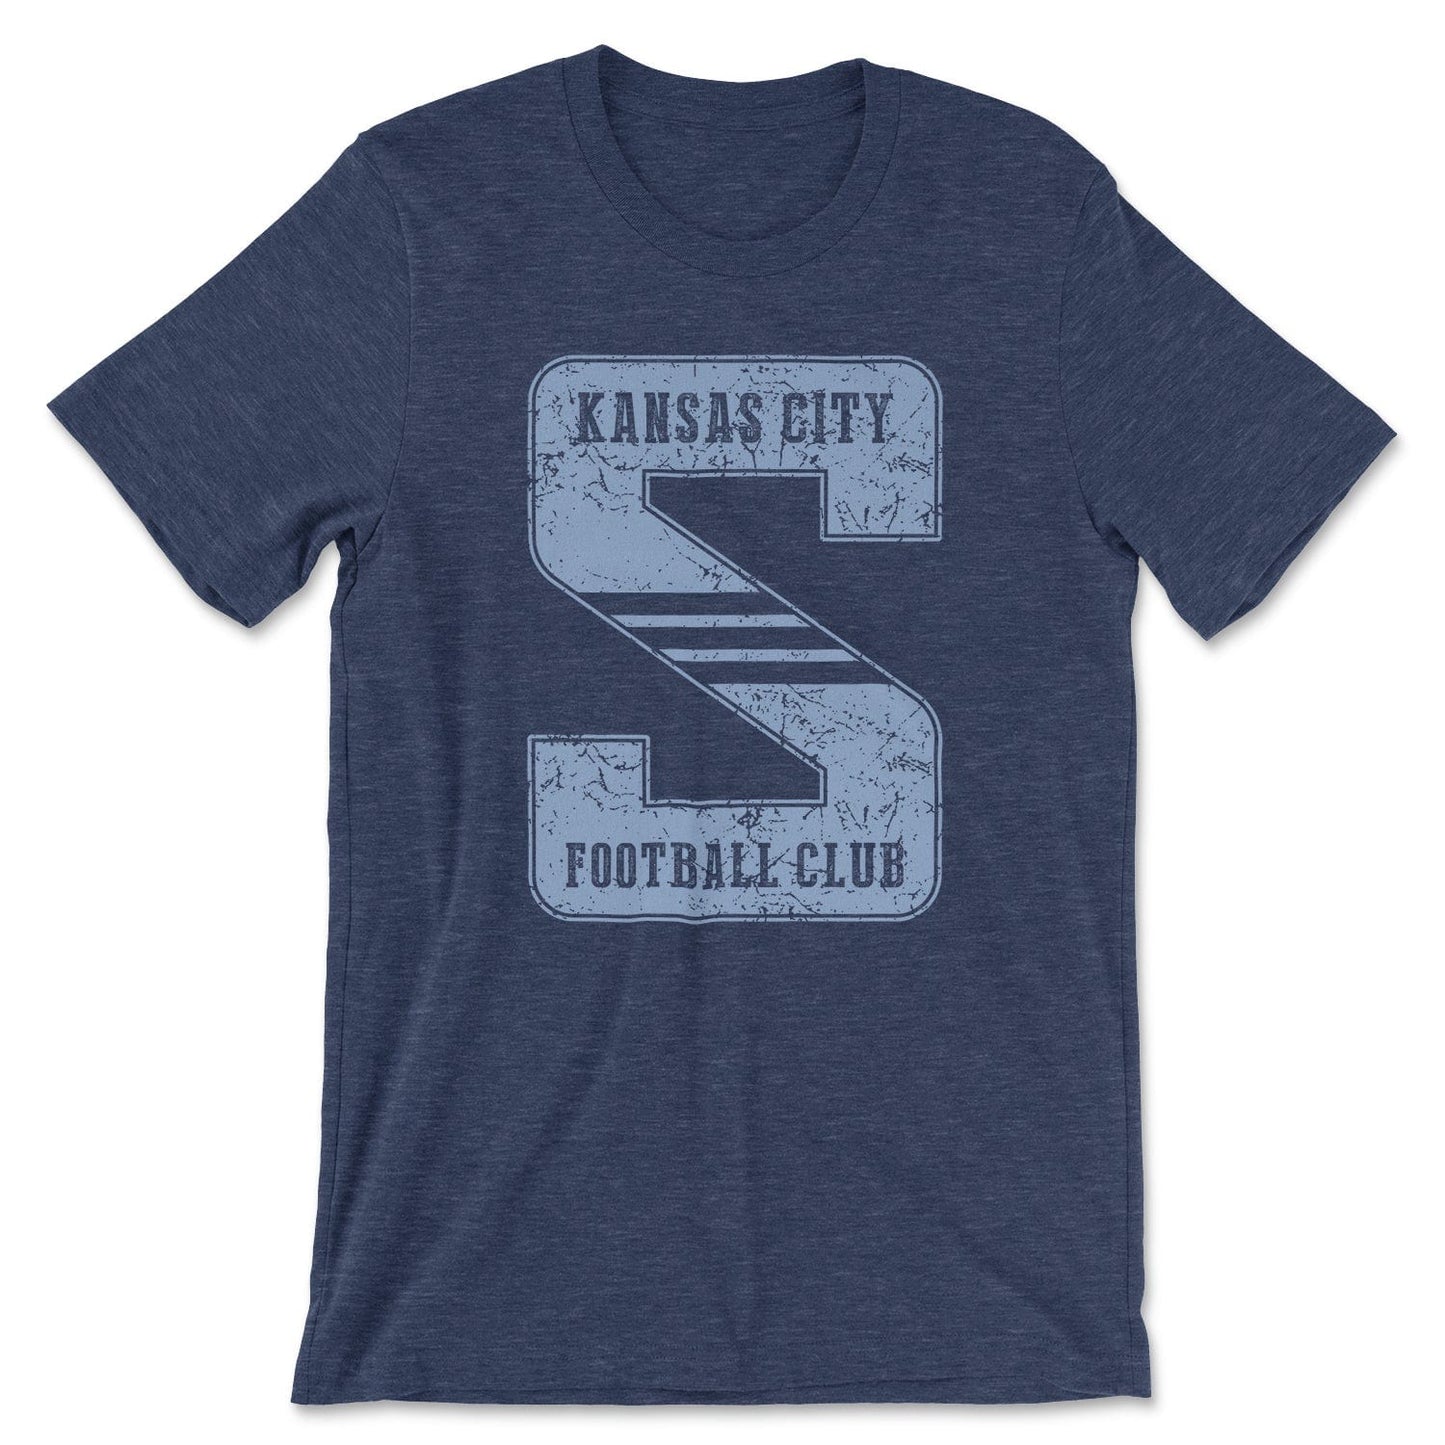 KC Swag Sporting Kansas City powder blue KANSAS CITY FOOTBALL CLUB on giant striped S on heather navy t-shirt